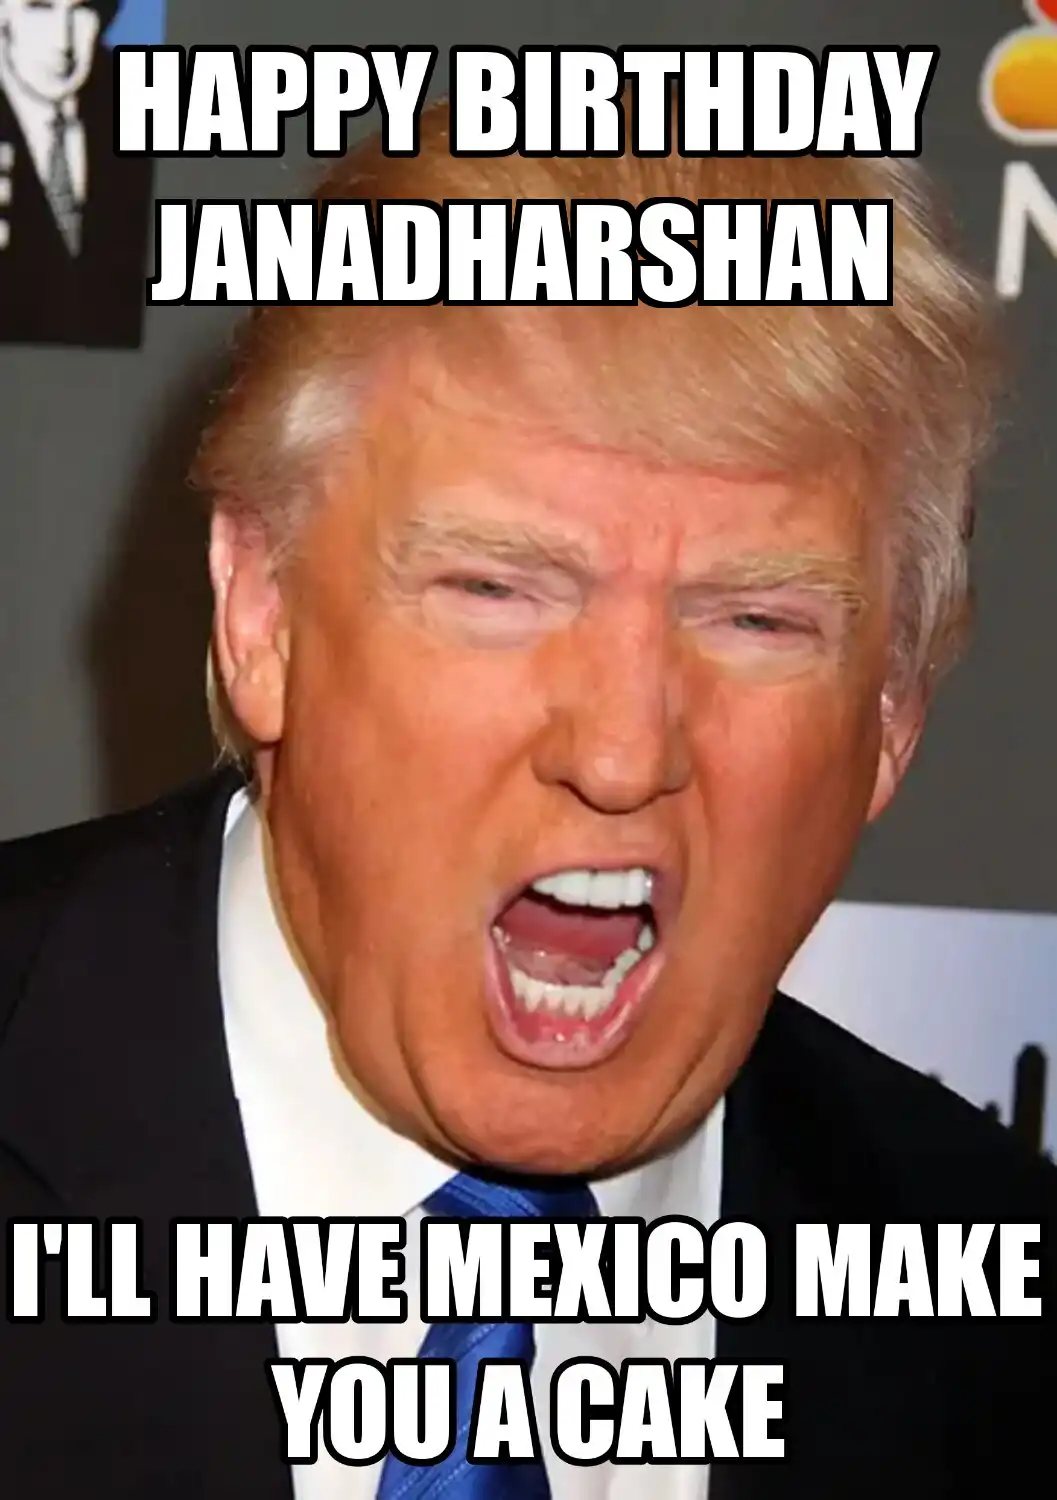 Happy Birthday Janadharshan Mexico Make You A Cake Meme